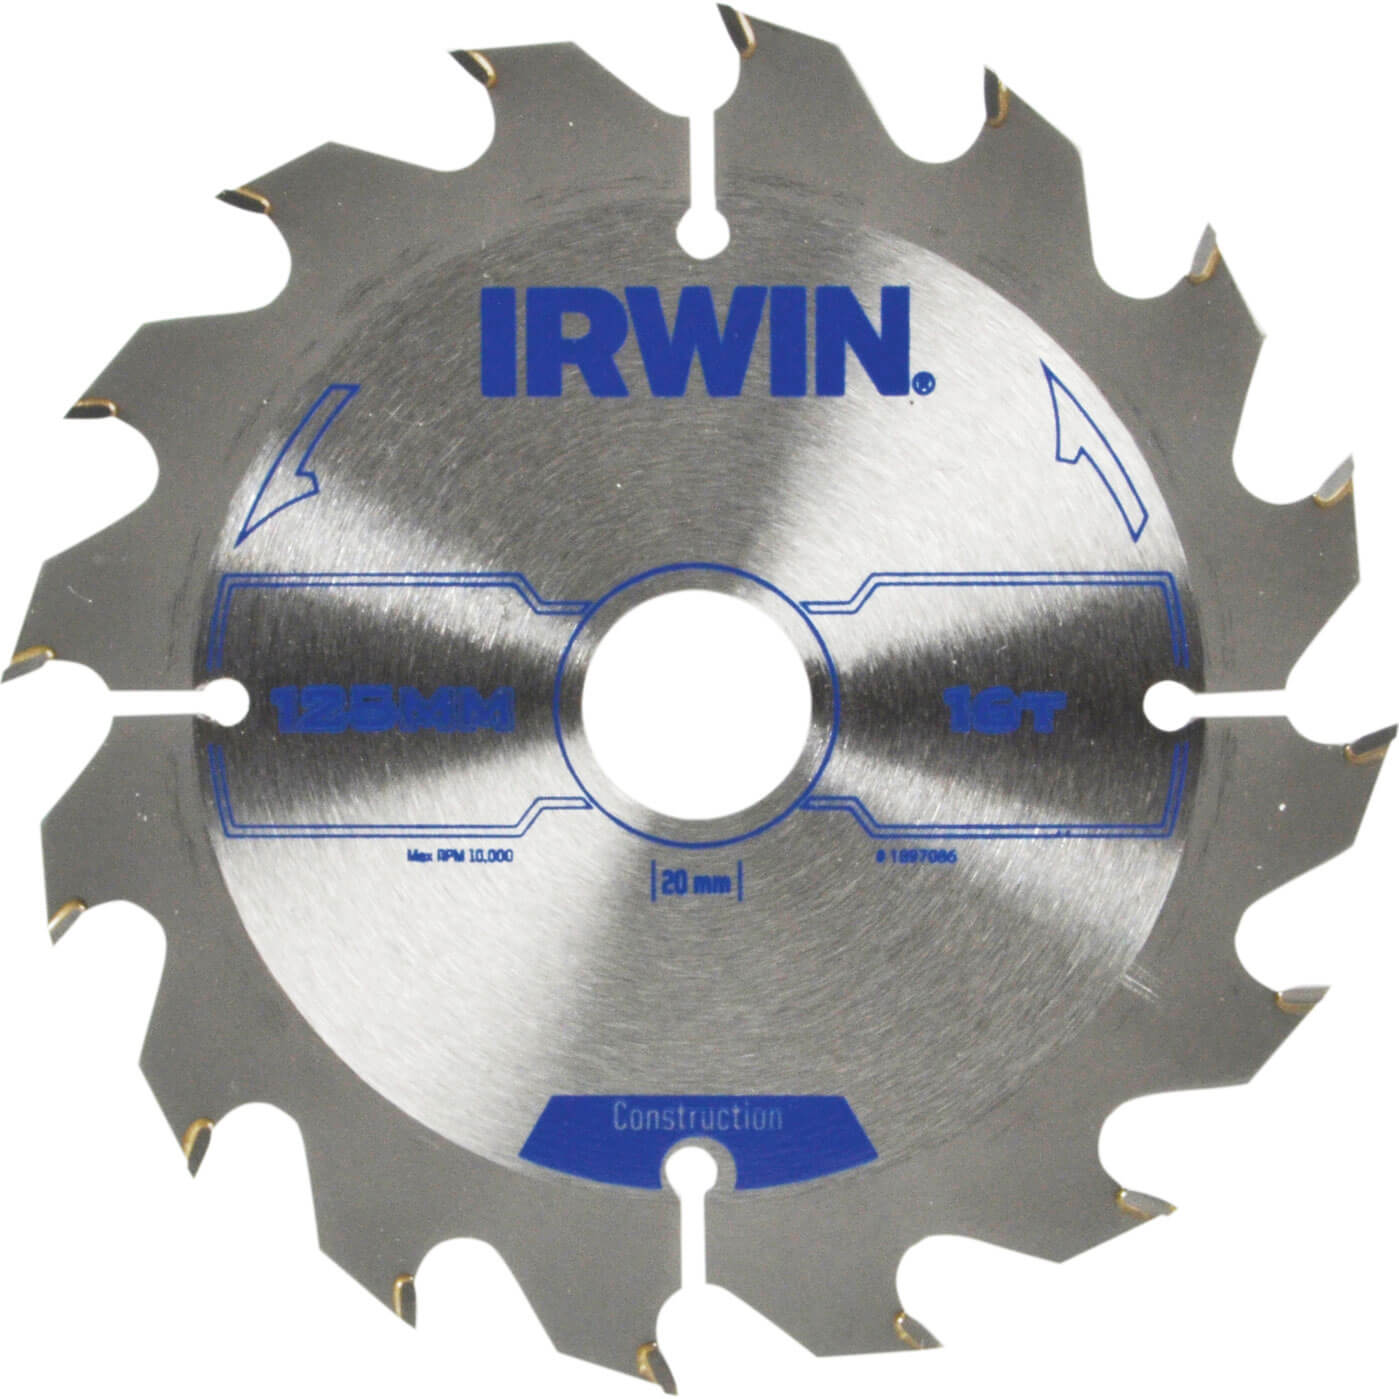 Photos - Tool Box IRWIN ATB Construction Circular Saw Blade 125mm 16T 20mm IRW1897086 